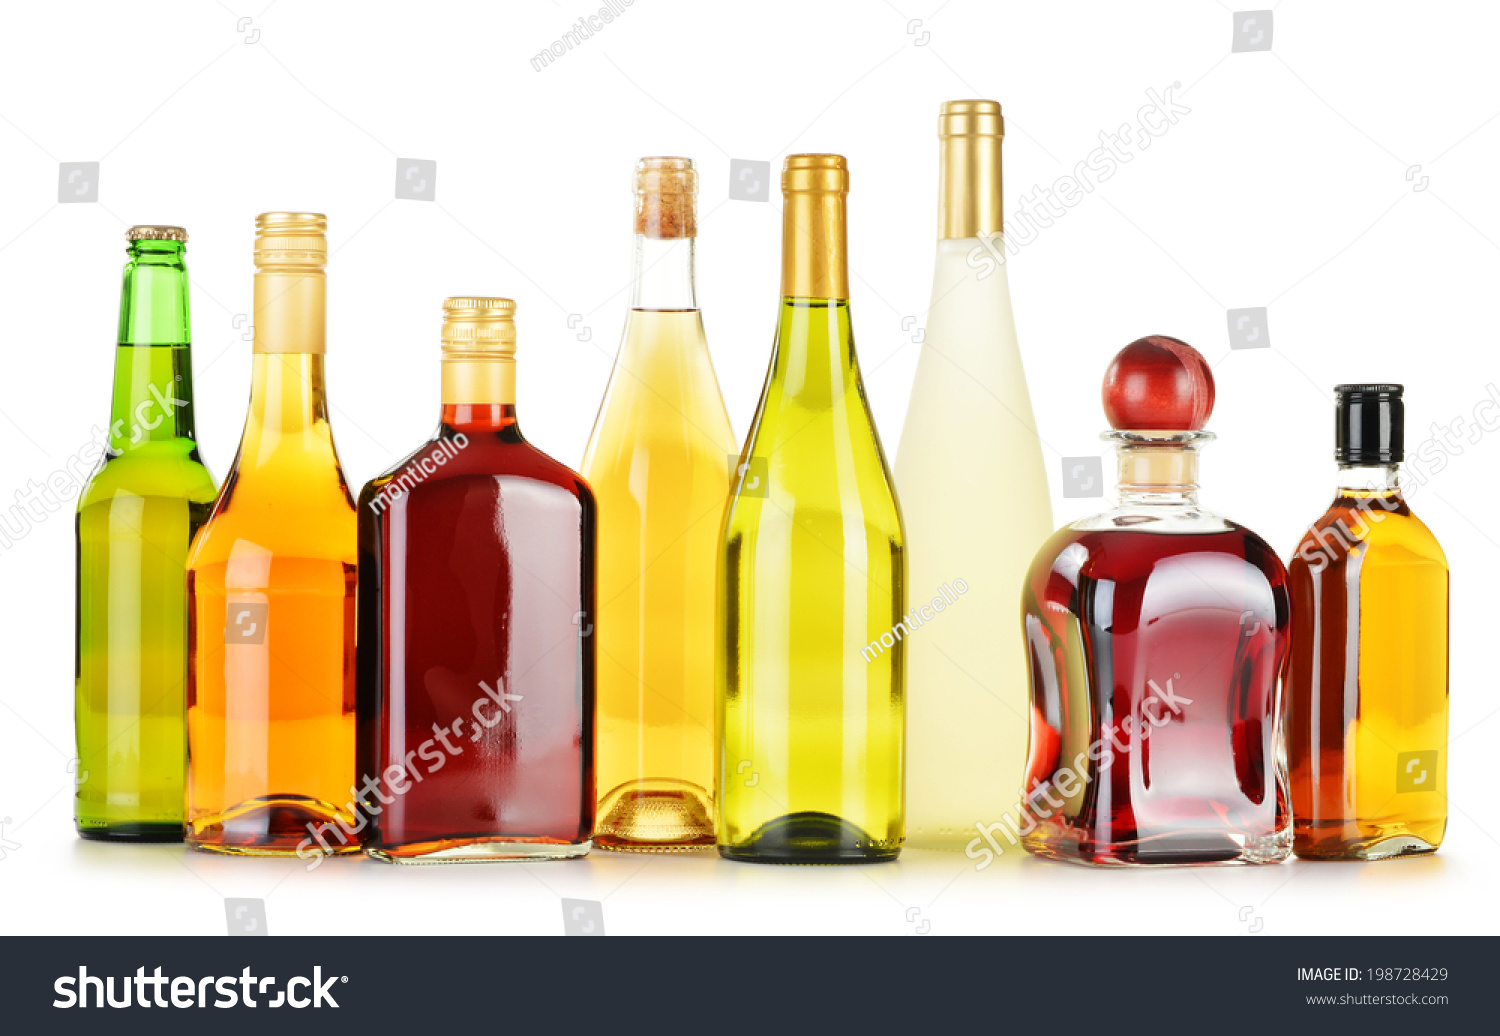 Bottles of assorted alcoholic beverages isolated on white background #198728429